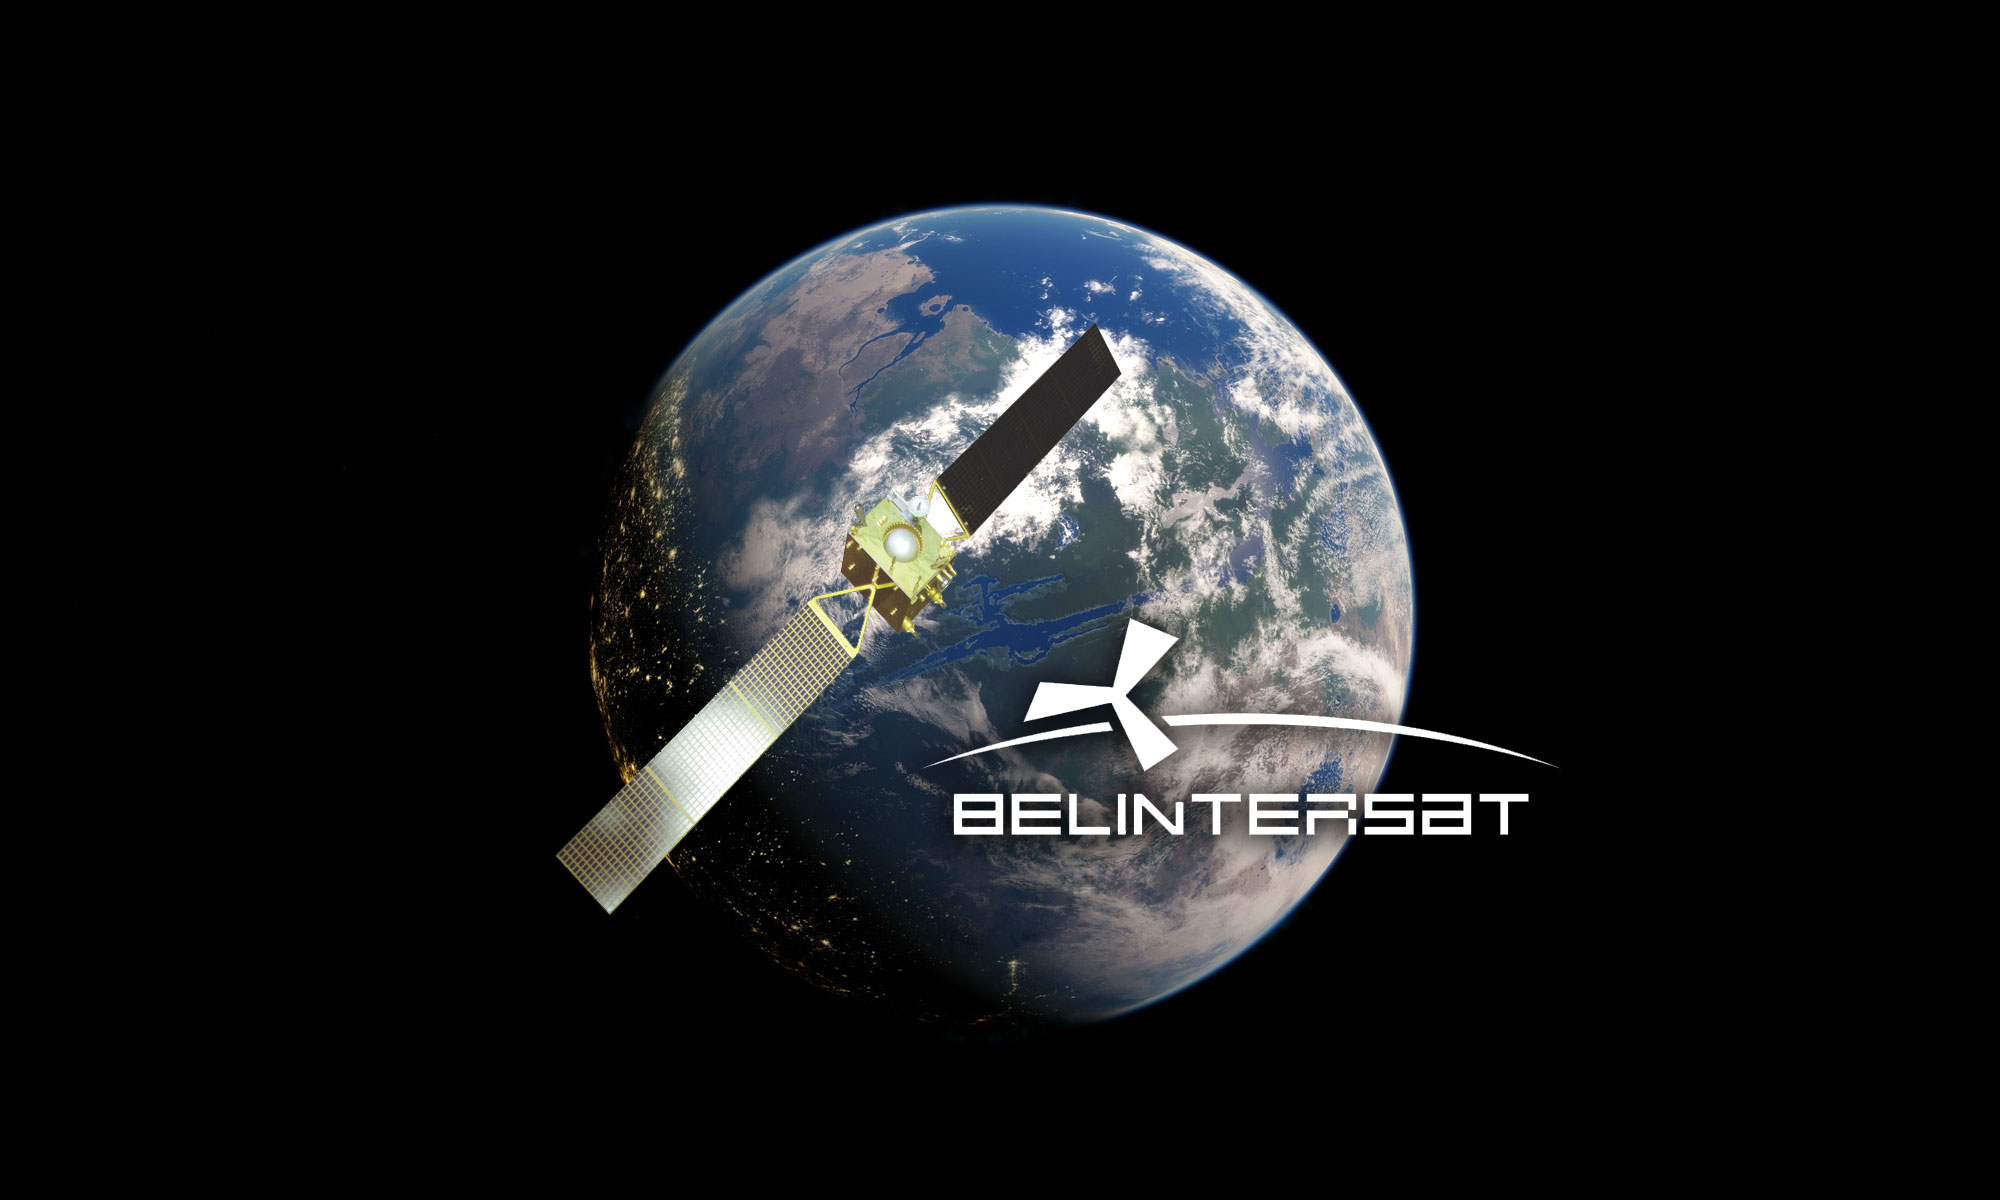 ВПК Беларуси успешно экспортирует услуги спутниковой связи